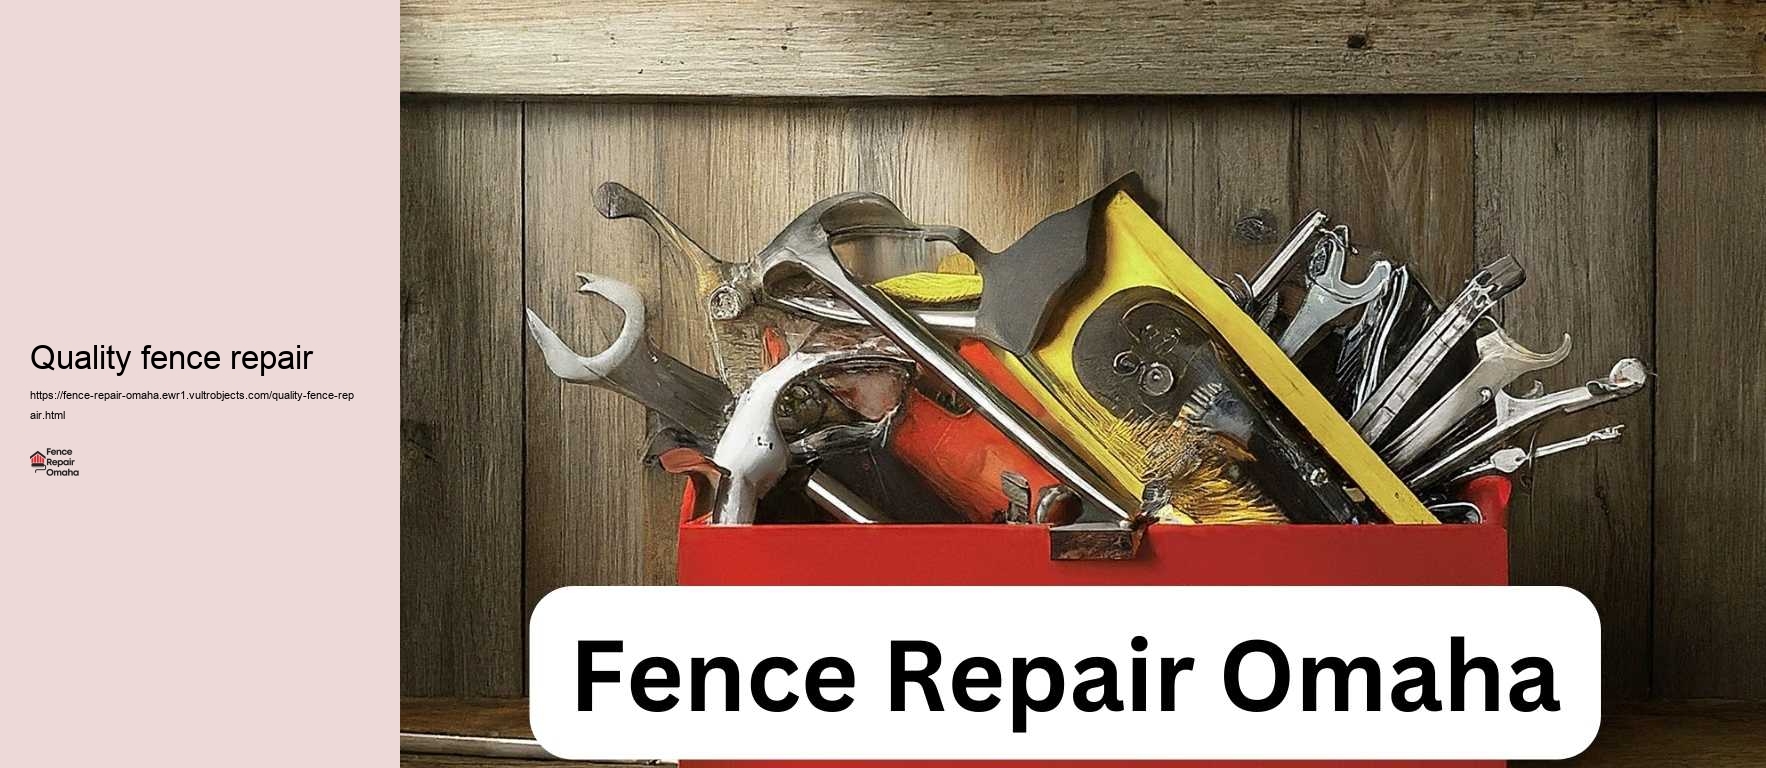 Quality fence repair